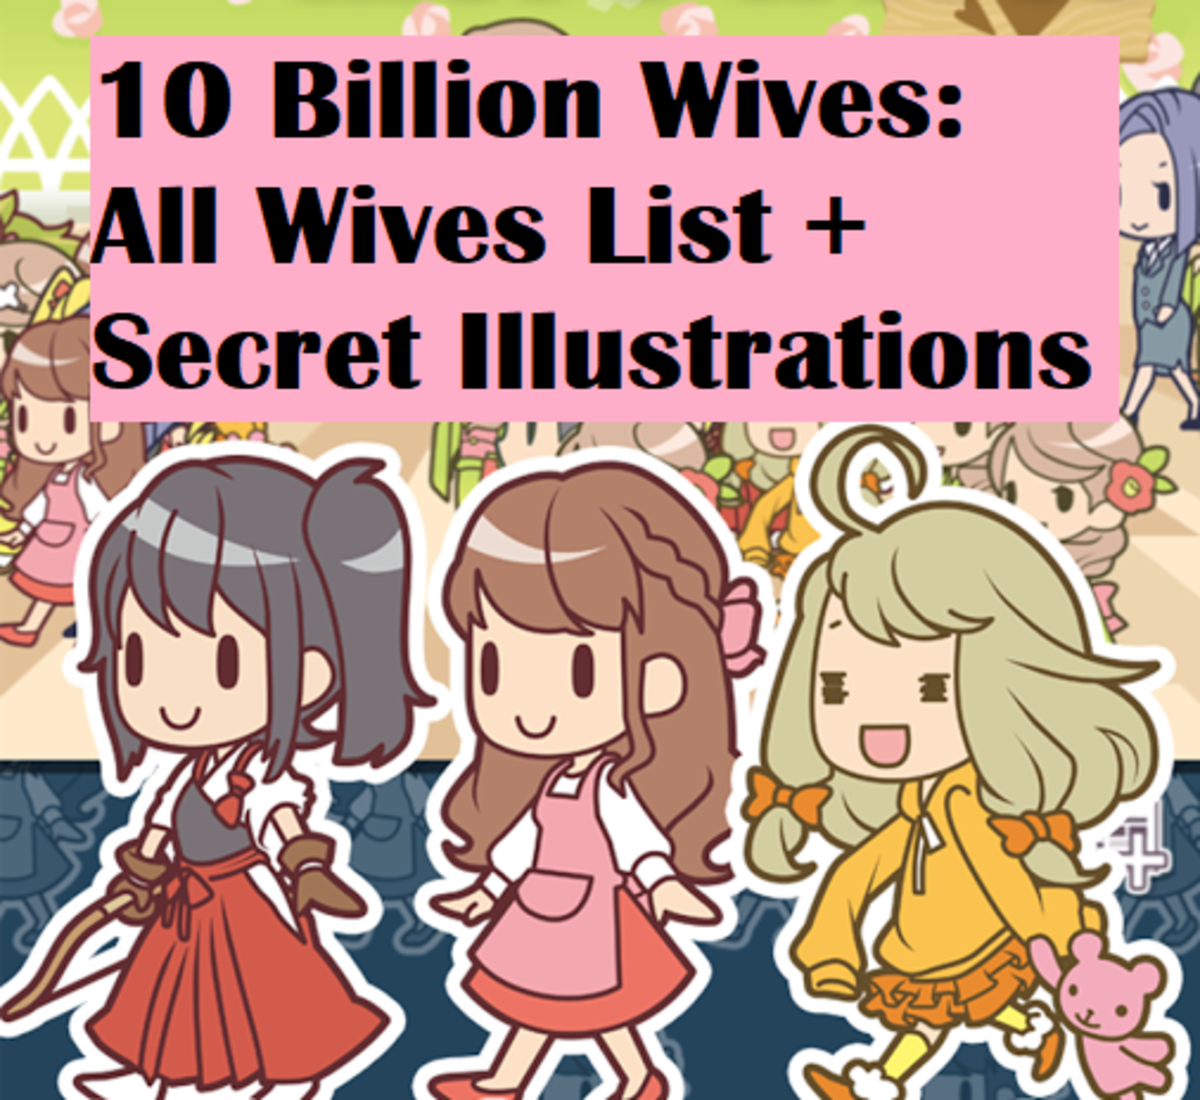 10 Billion Wives: All Wives List + Secret Illustrations